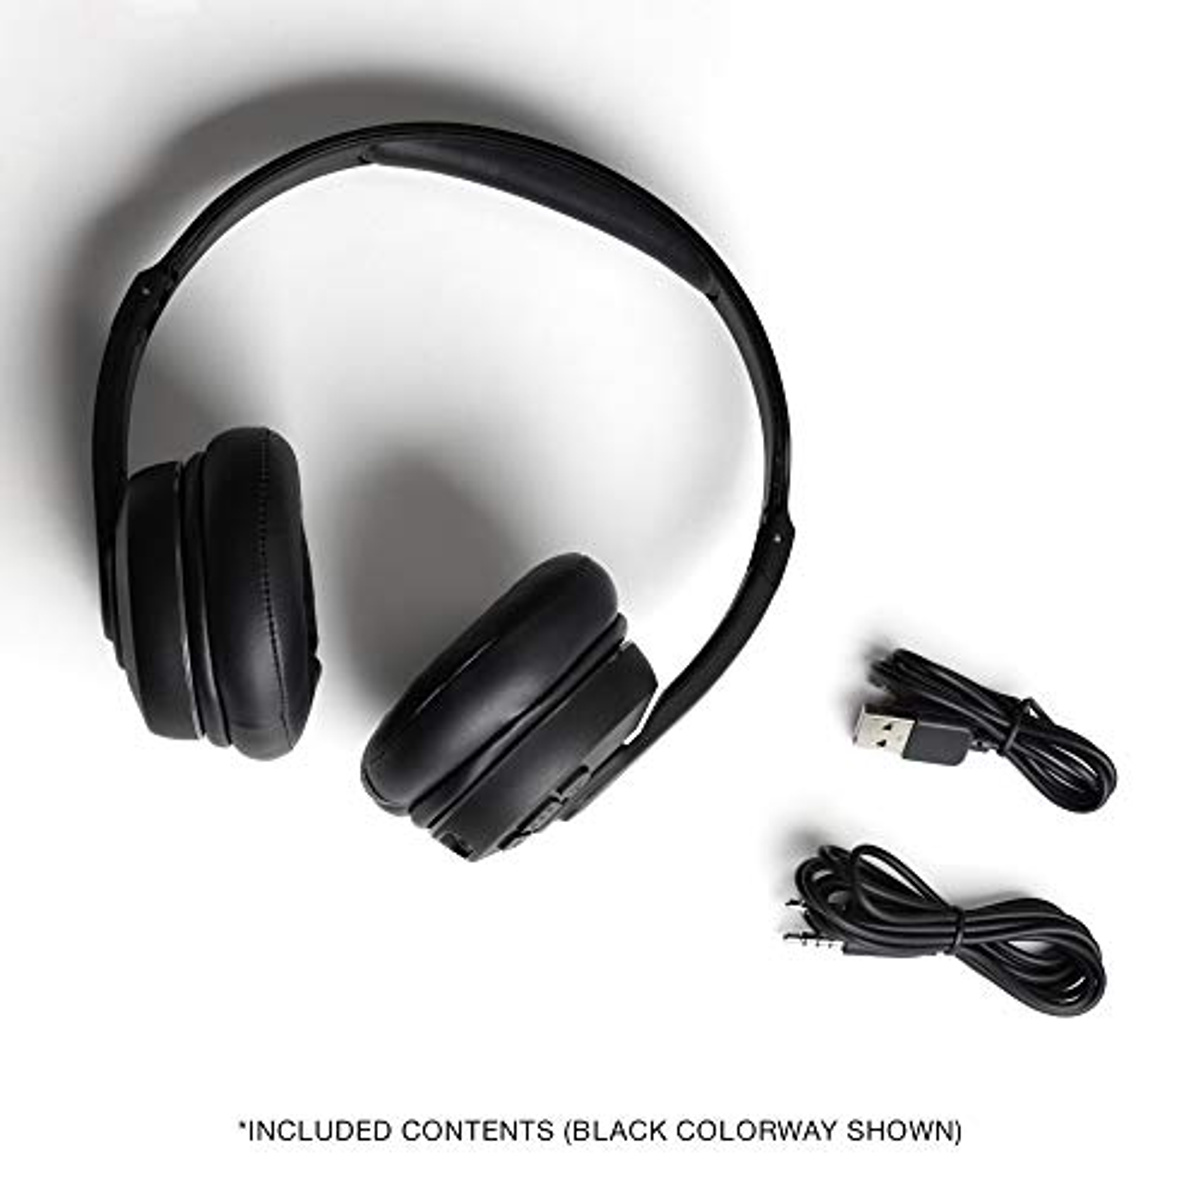 SKULLCANDY S5CSW-M448, On-ear Bluetooth Schwarz kopfhörer Bluetooth